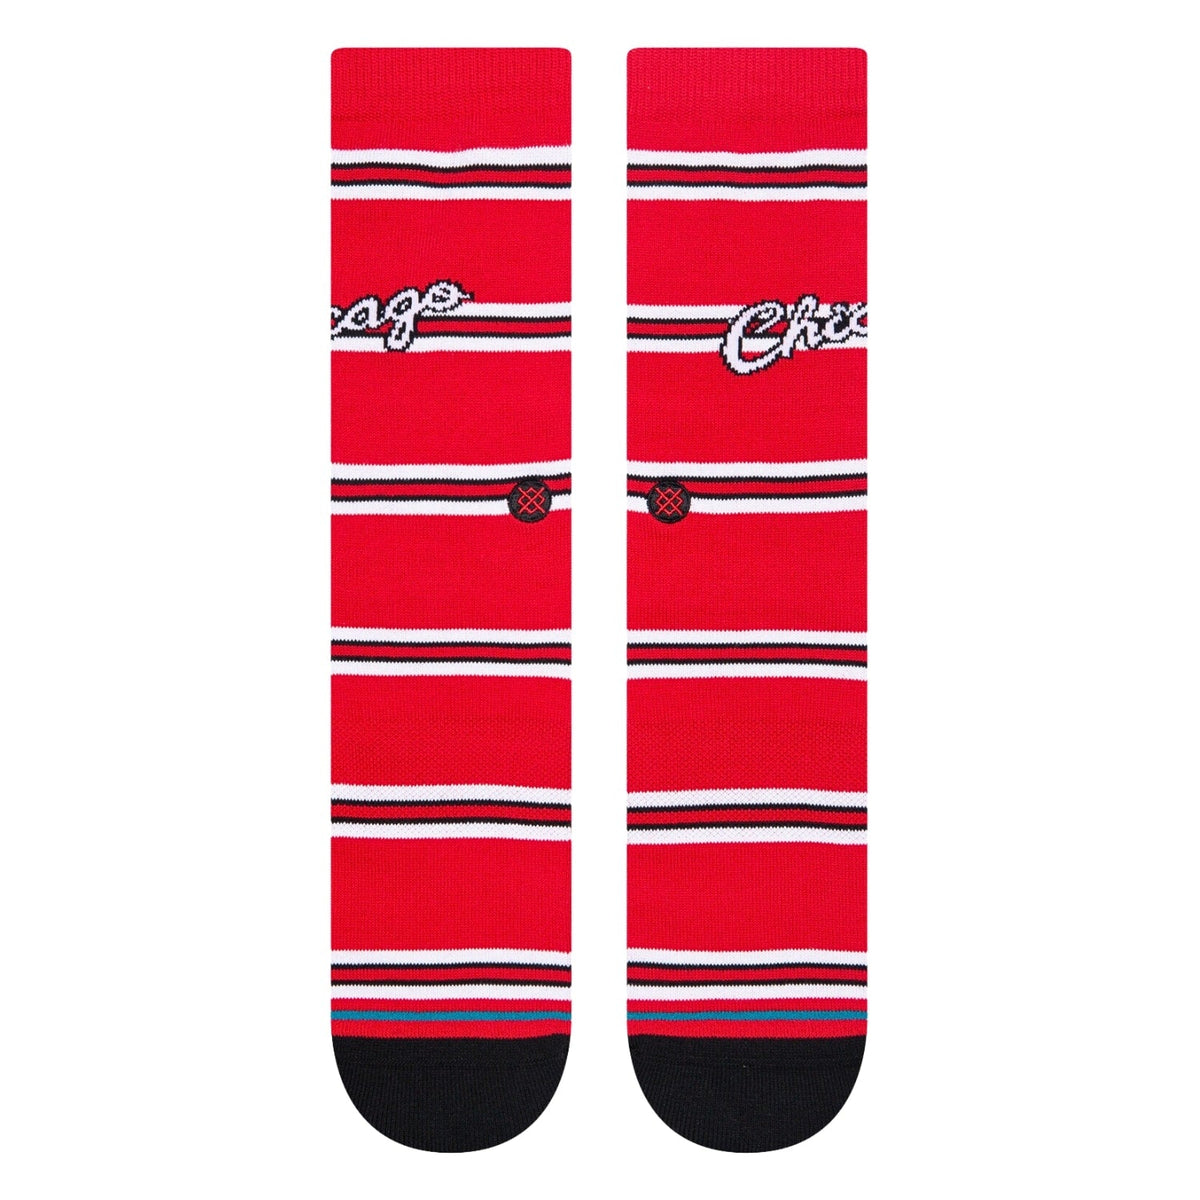 Stance Classics Bulls Socks - Red